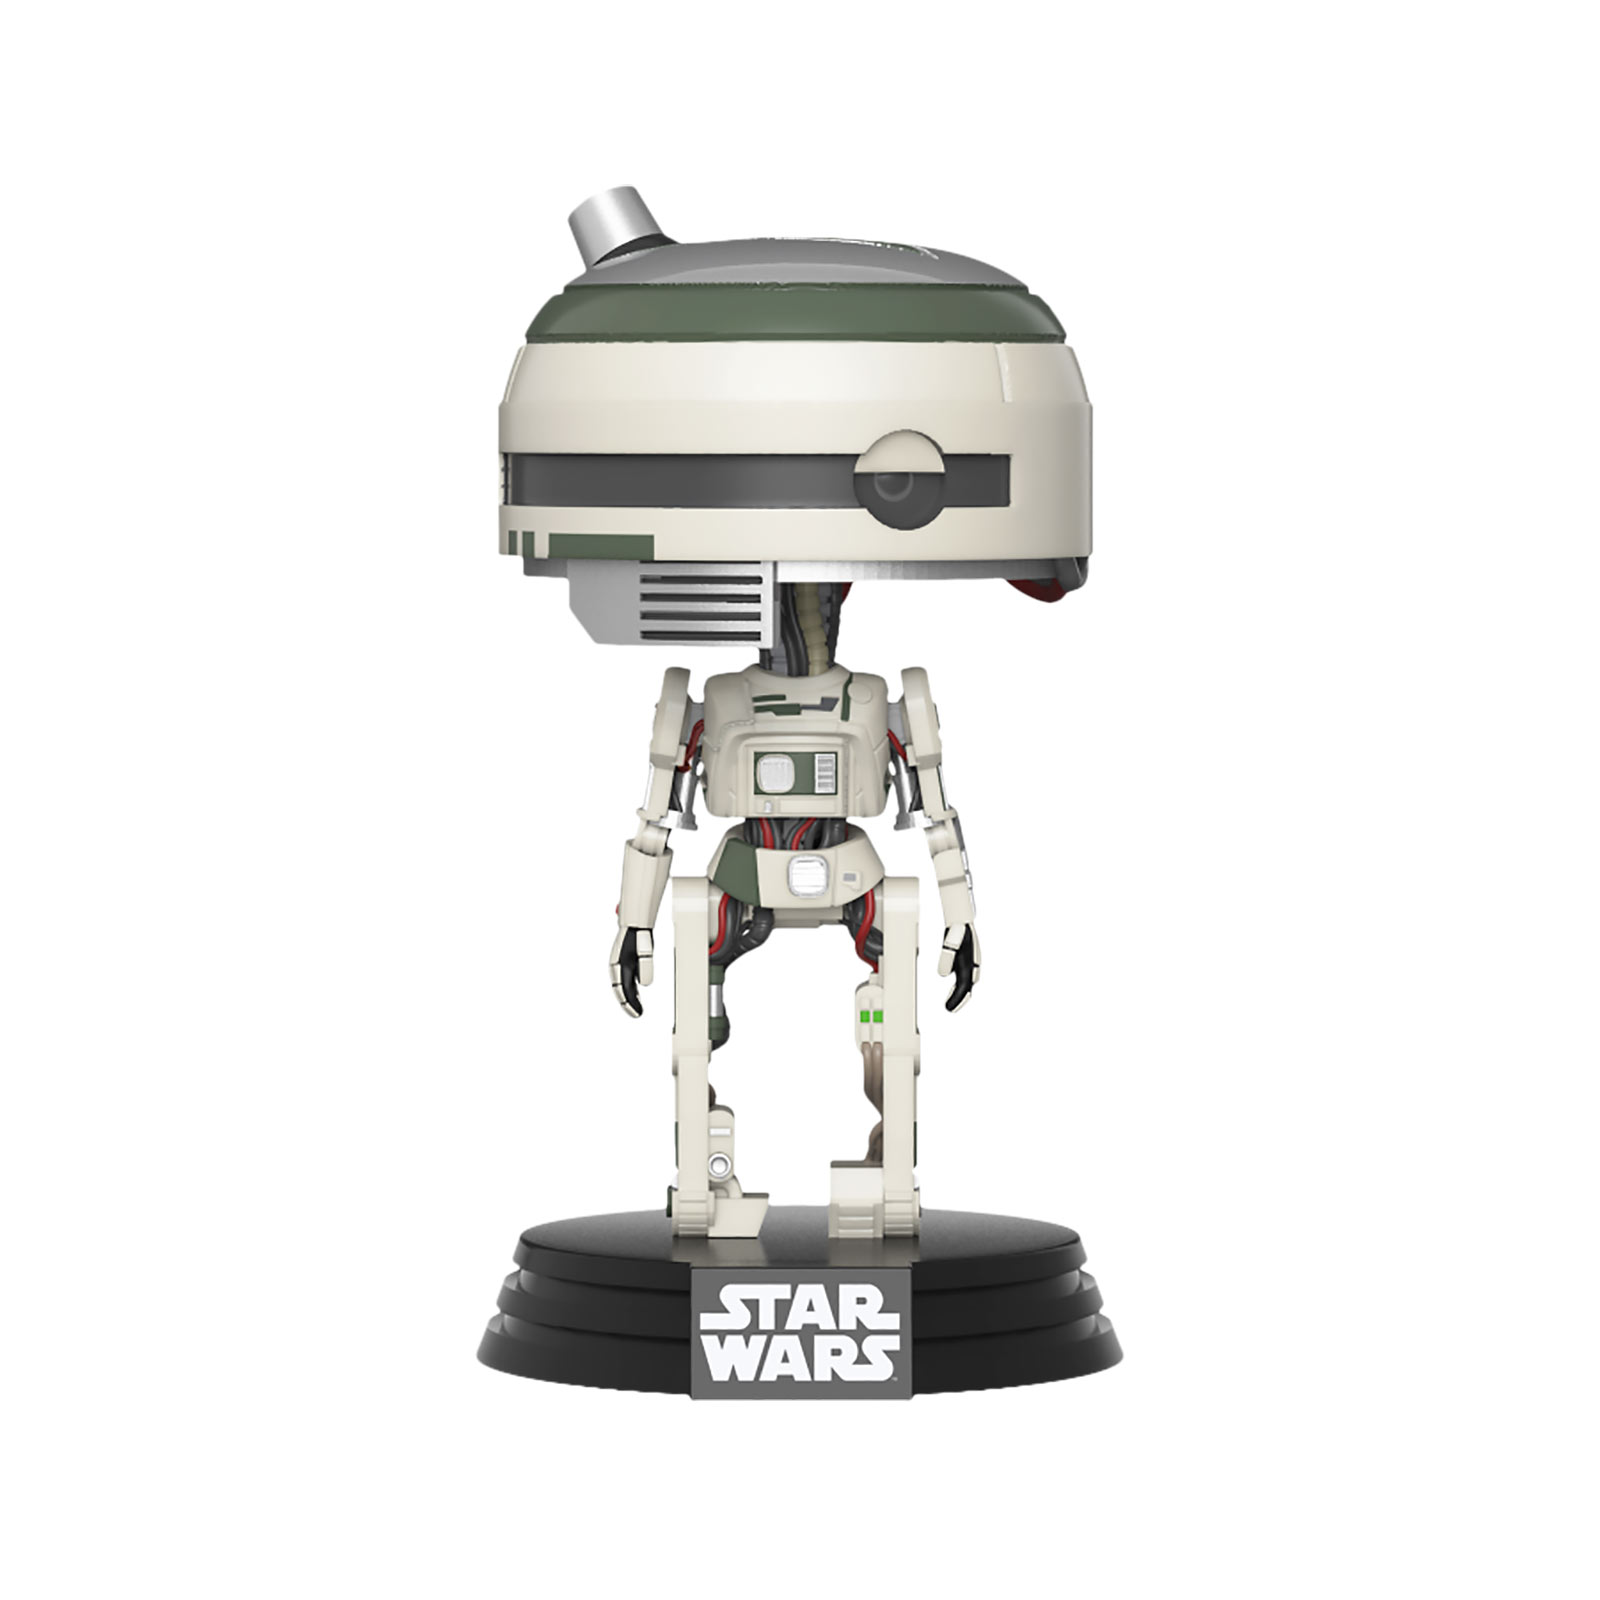 Star Wars - L3-37 Figurine Funko Pop à tête branlante